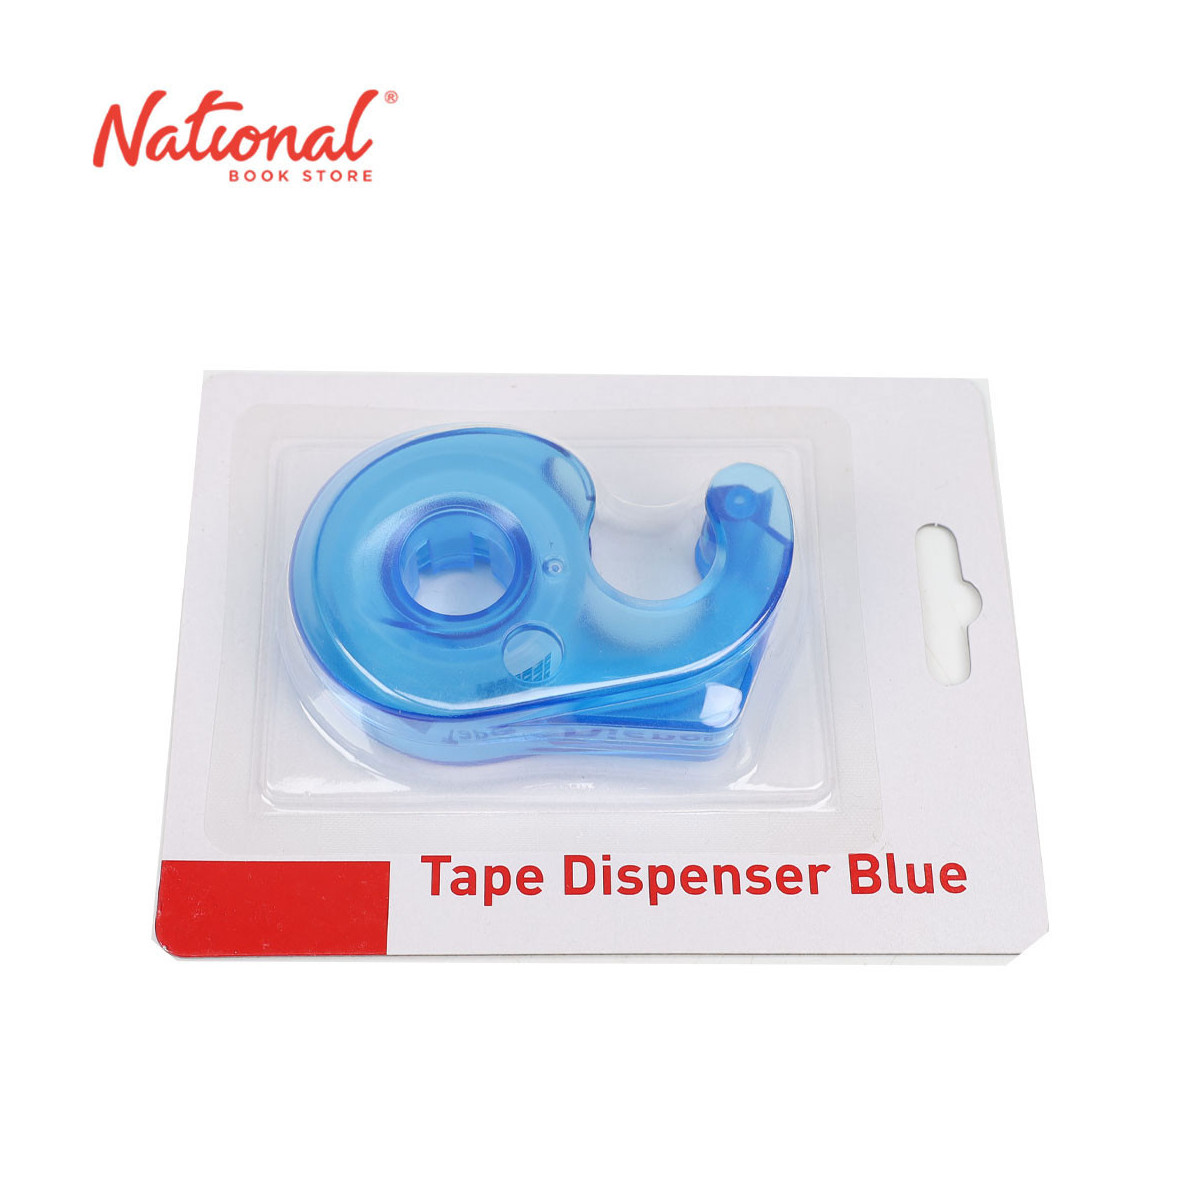 NB Looking Tape Dispenser Svk20T036, Blue Handy - Office Supplies